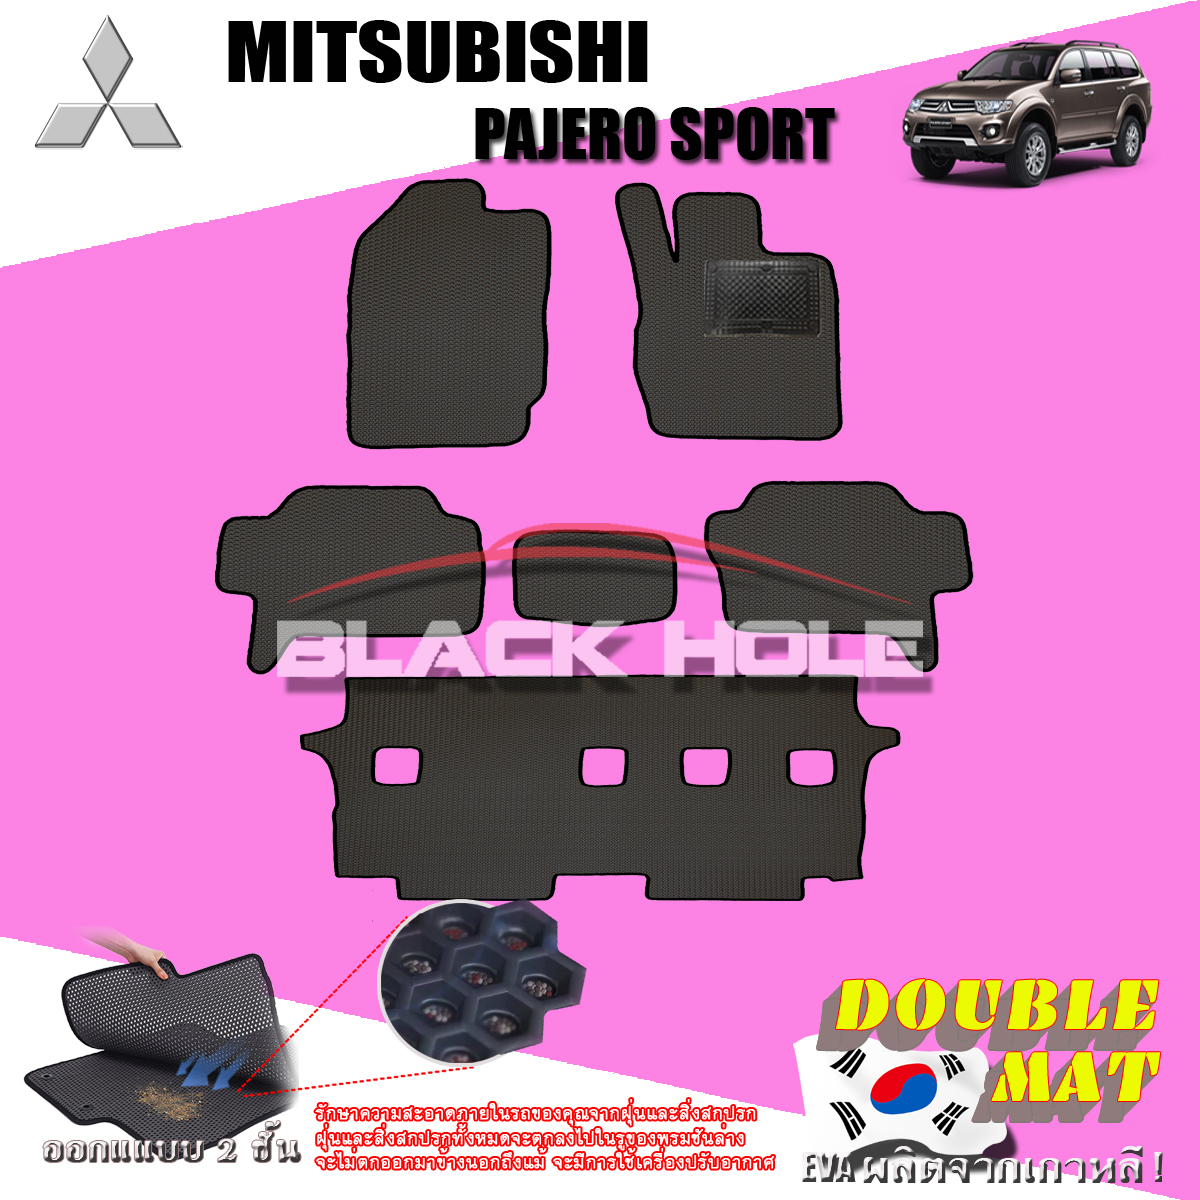 Mitsubishi Pajero Sport ปี 2008 - ปี 2014 พรมรถยนต์Pajero พรมเข้ารูปสองชั้นแบบรูรังผึ้ง Blackhole Double Mat (ชุดห้องโดยสาร) สี SET B ( 6 Pcs. ) Black-สีดำขอบเดิม ( 6 ชิ้น ) สี SET B ( 6 Pcs. ) Black-สีดำขอบเดิม ( 6 ชิ้น )